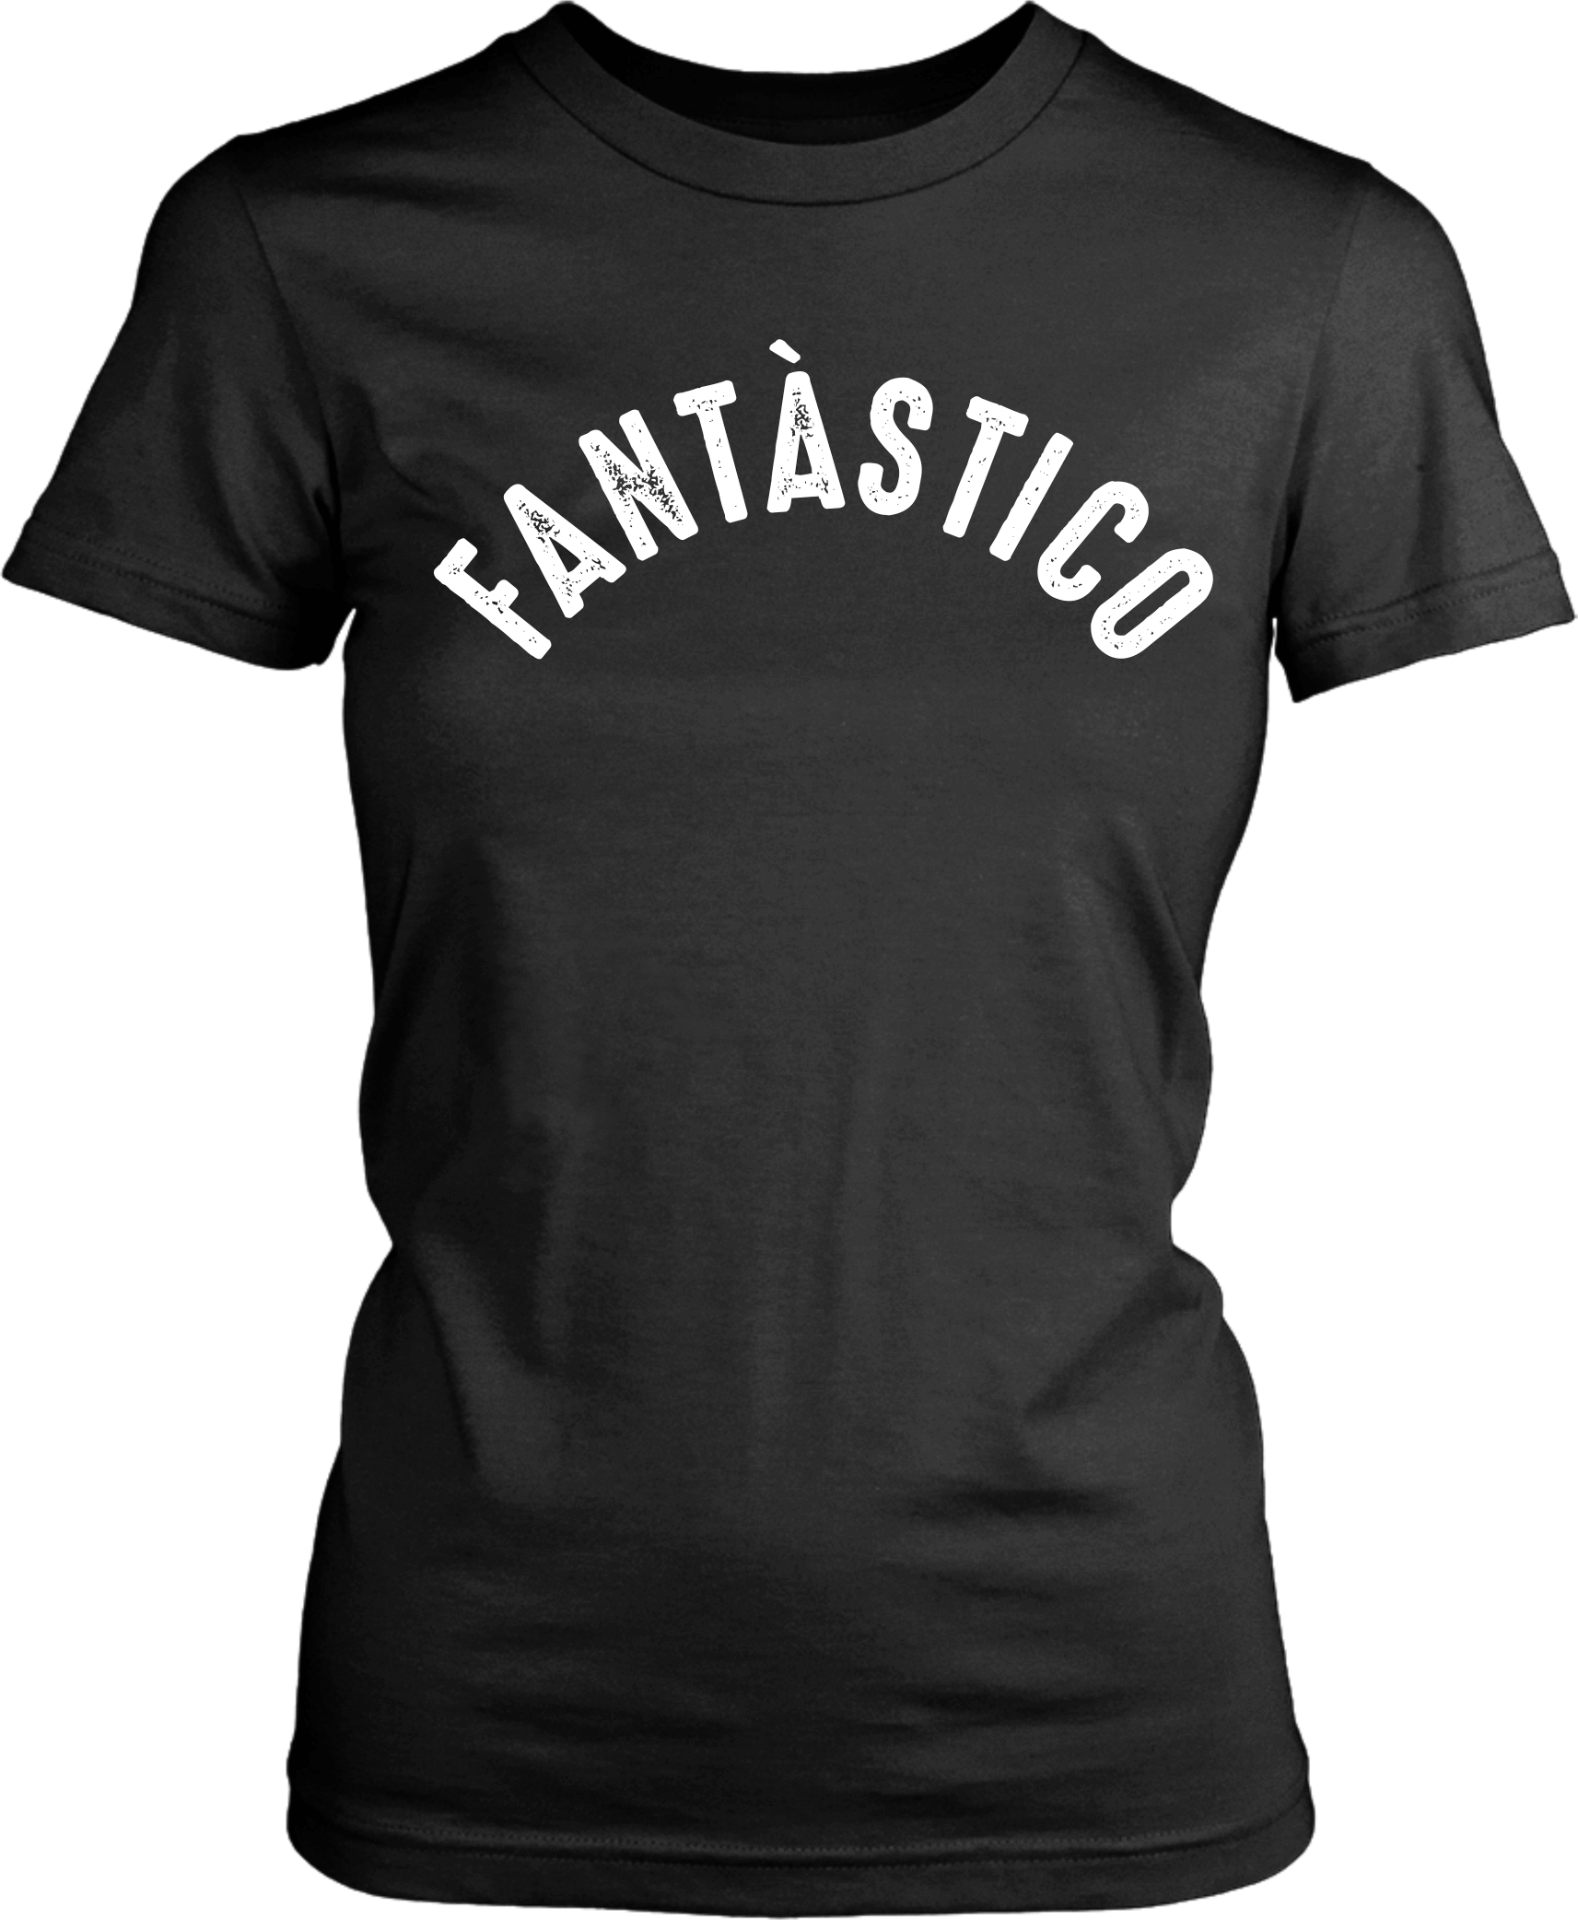 Fantastico - T-shirt Design